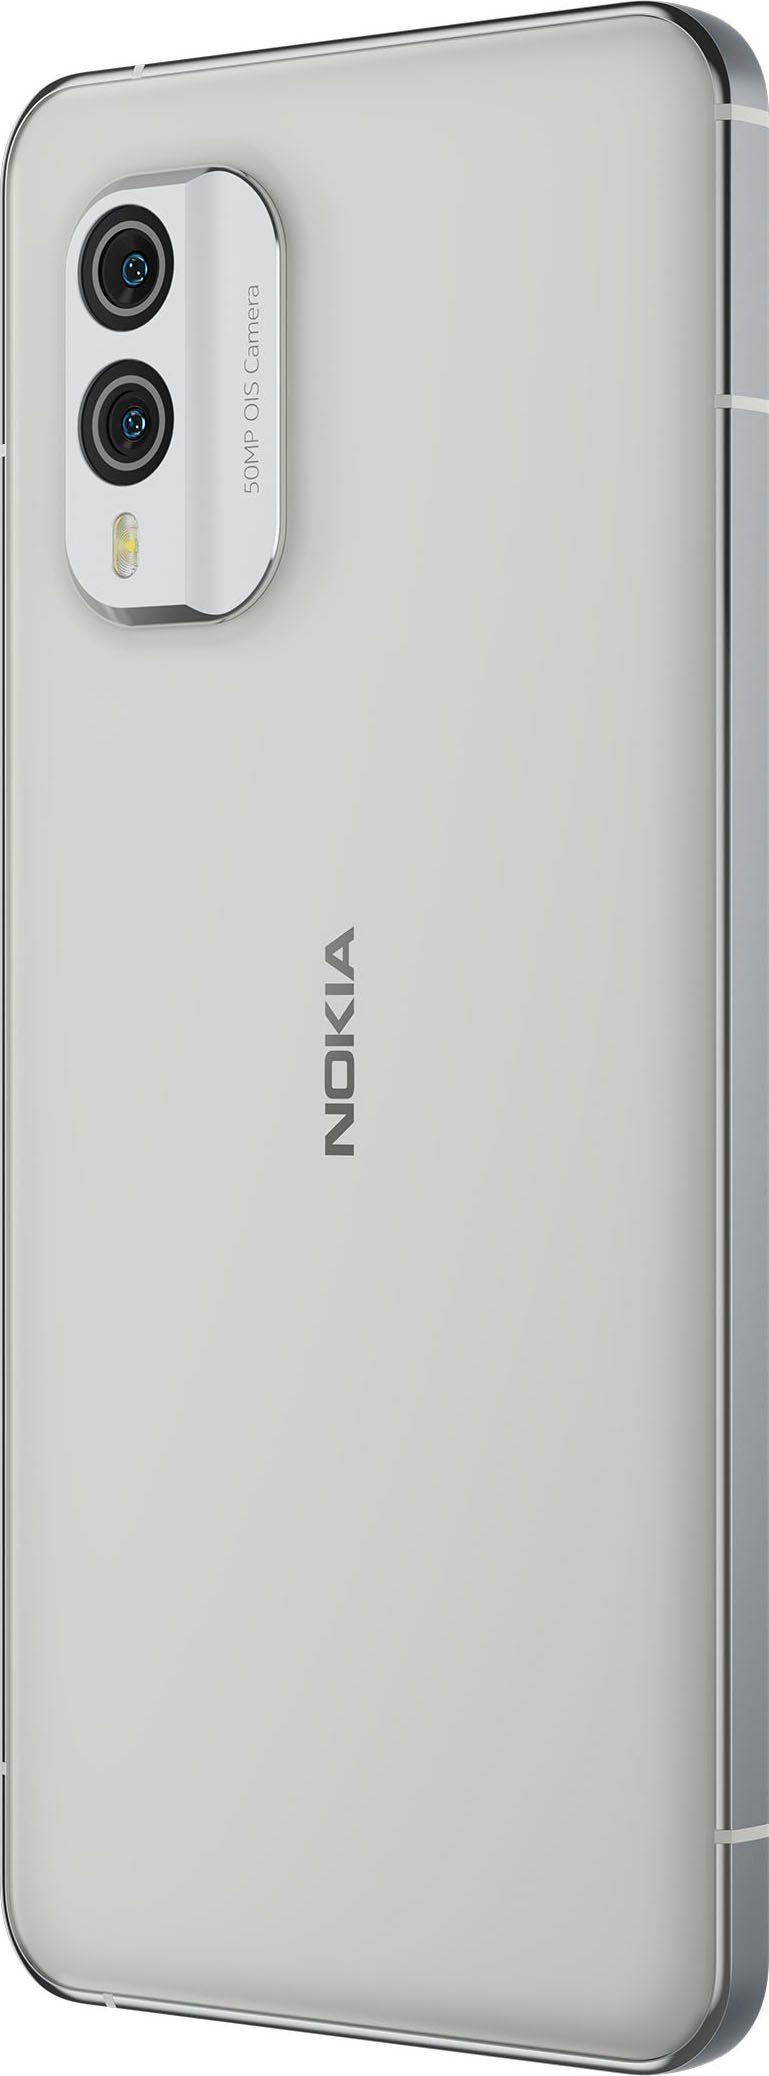 X30 Ice 5G White cm/6,43 Nokia Speicherplatz, Zoll, Smartphone MP 50 Kamera) GB 256 (16,33